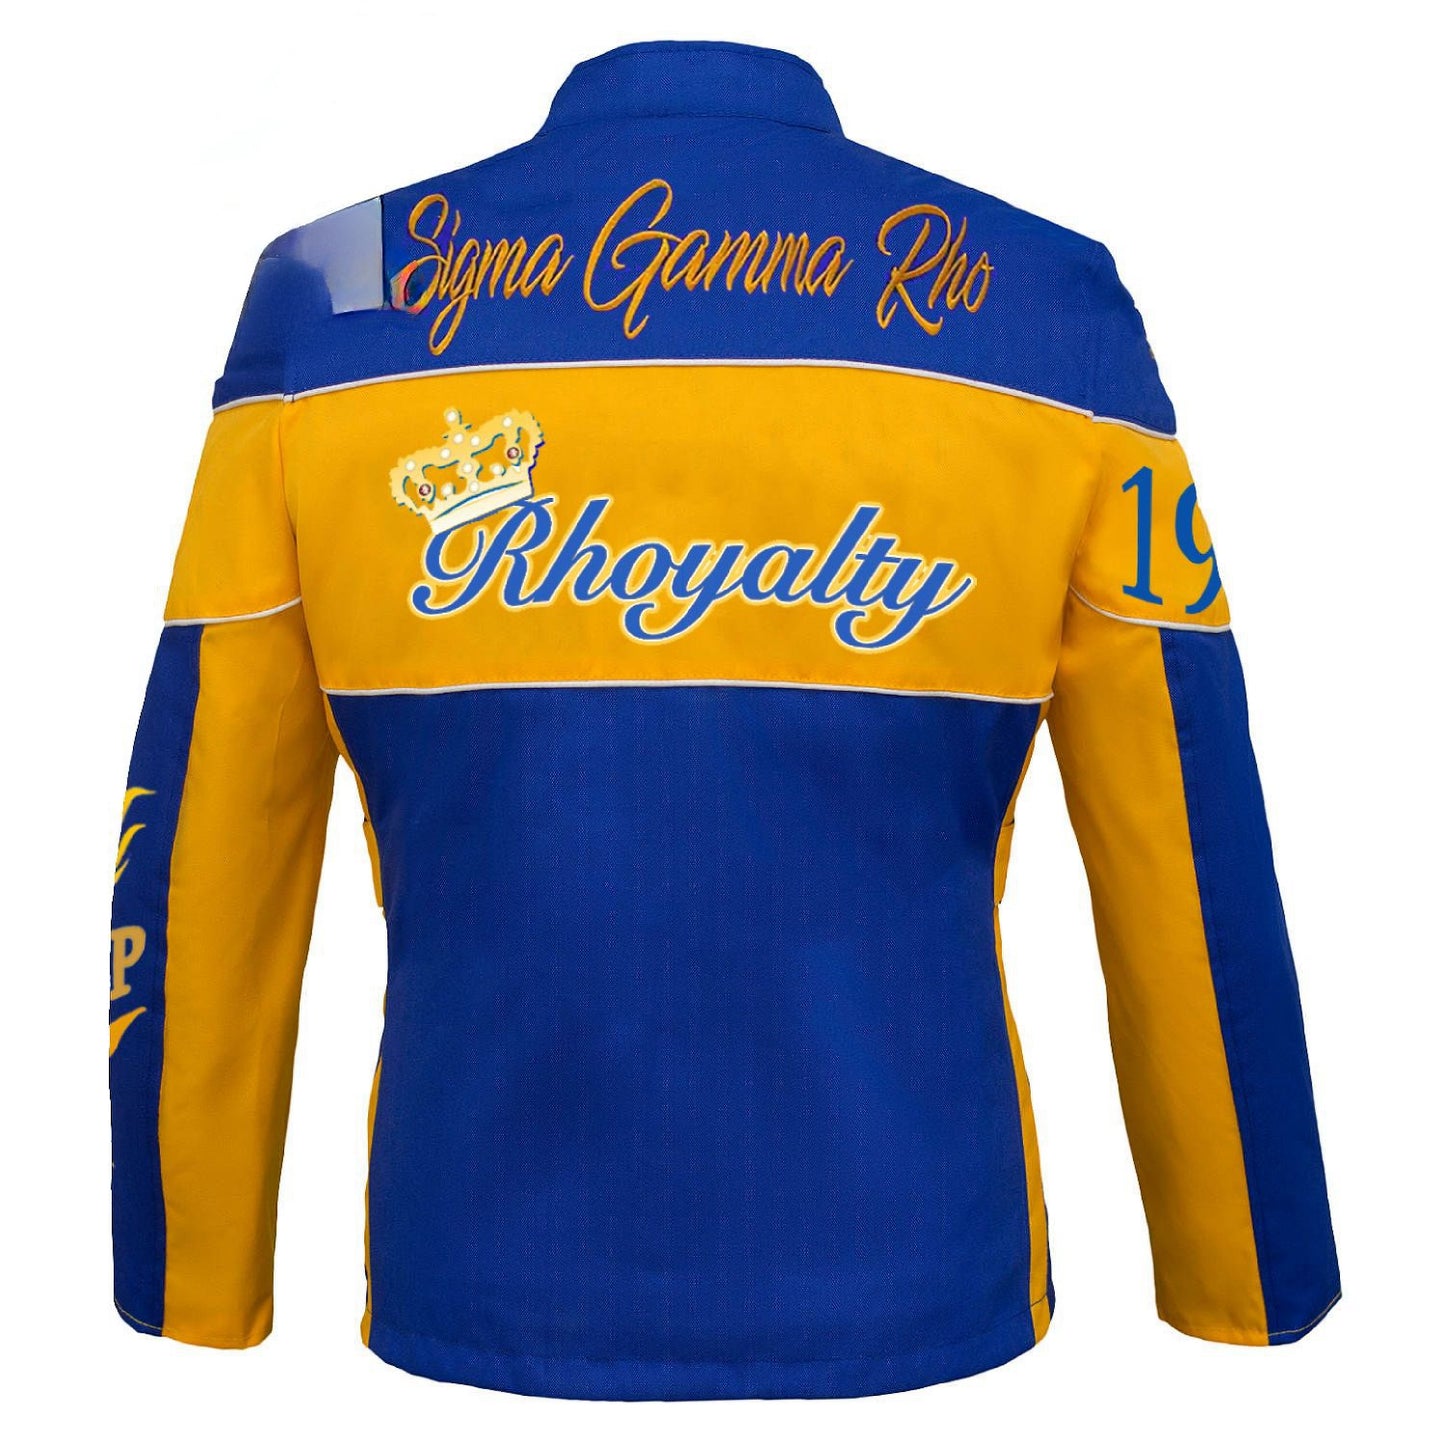 Sigma Gamma Rho:  Cycle Jacket (inspired)